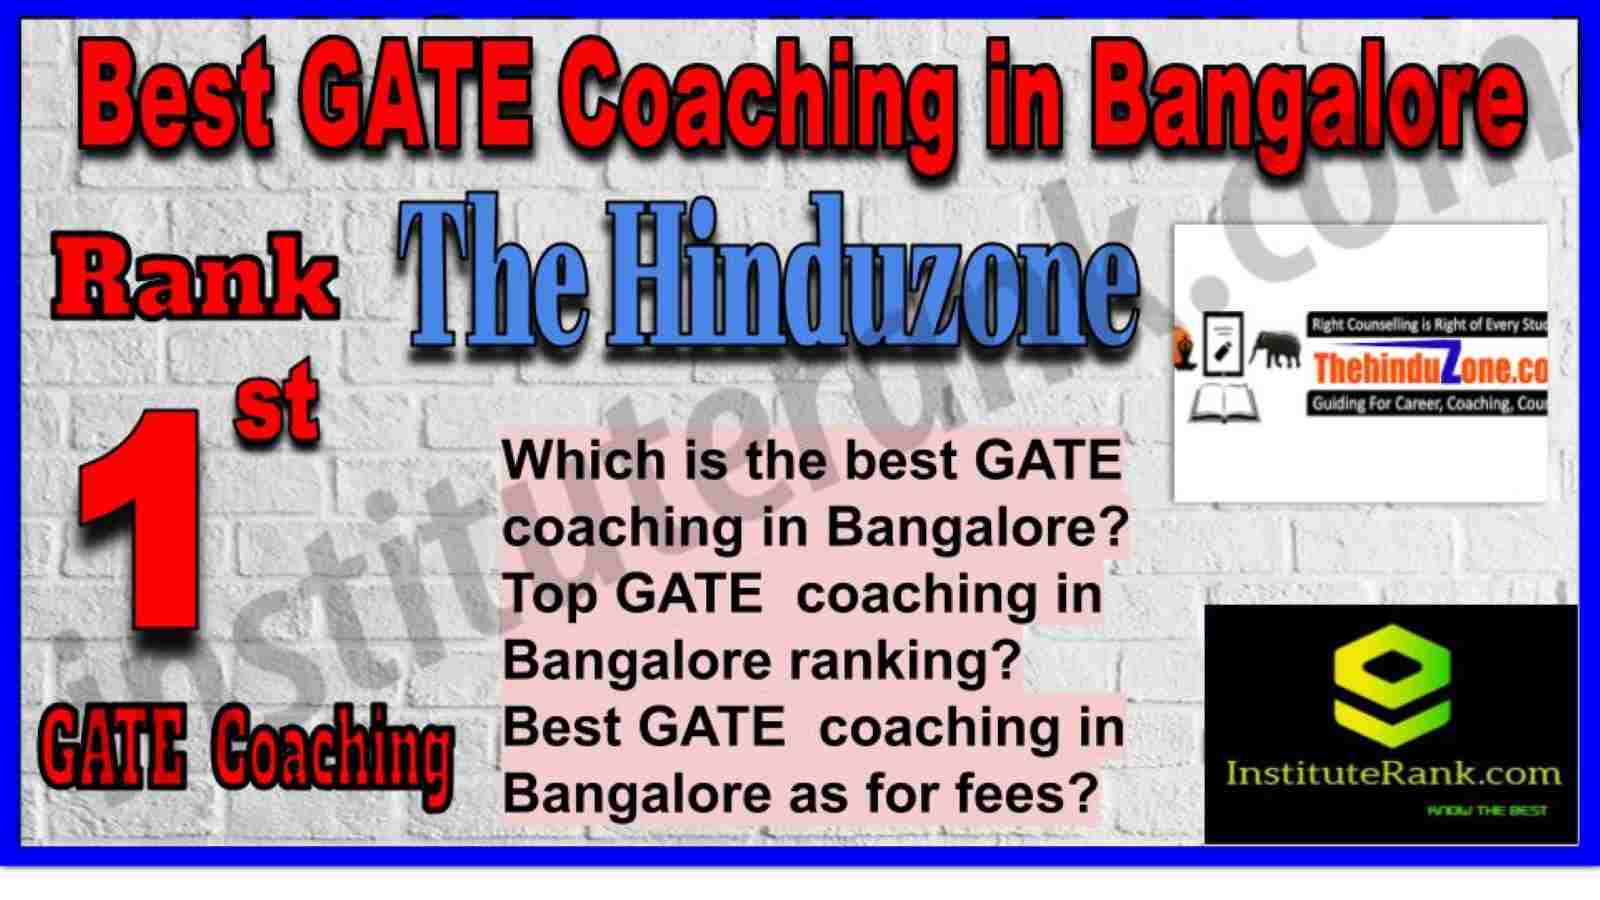 Rank 1 Best GATE Coaching in Bangalore